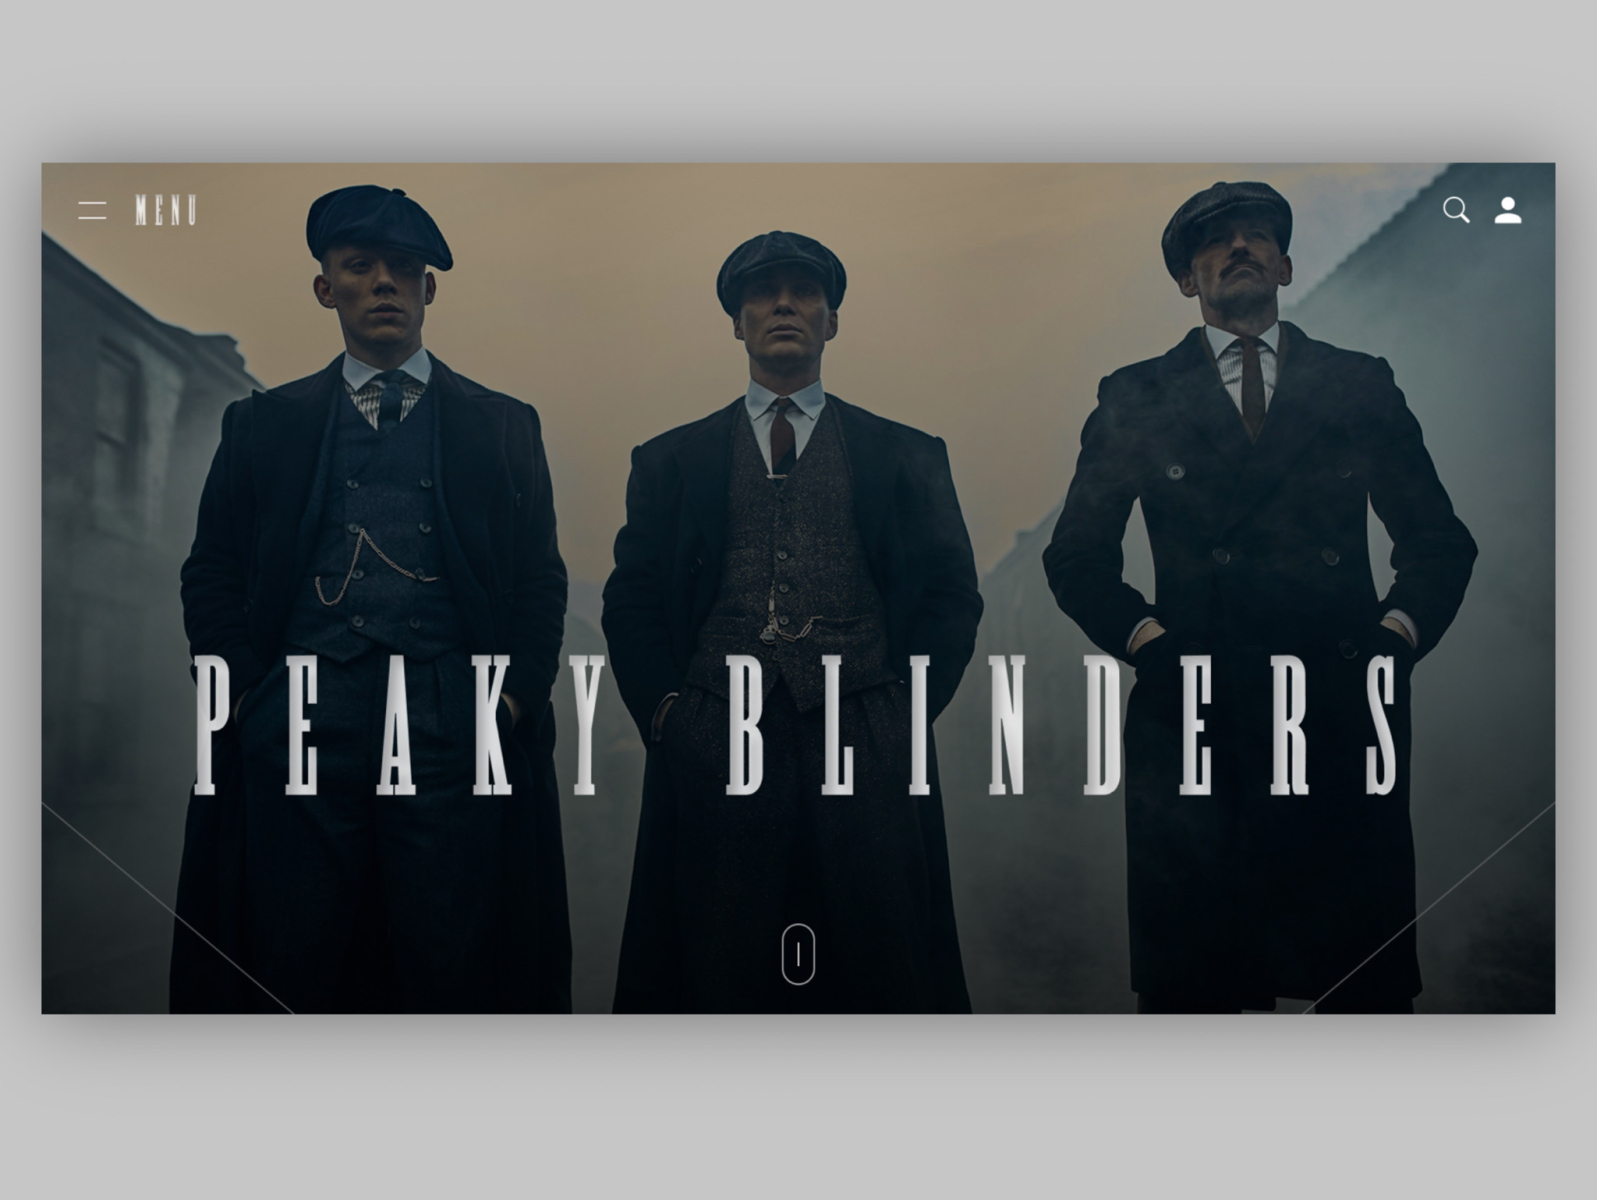 Peaky Blinders By Muhammad Maher Shanati On Dribbble 